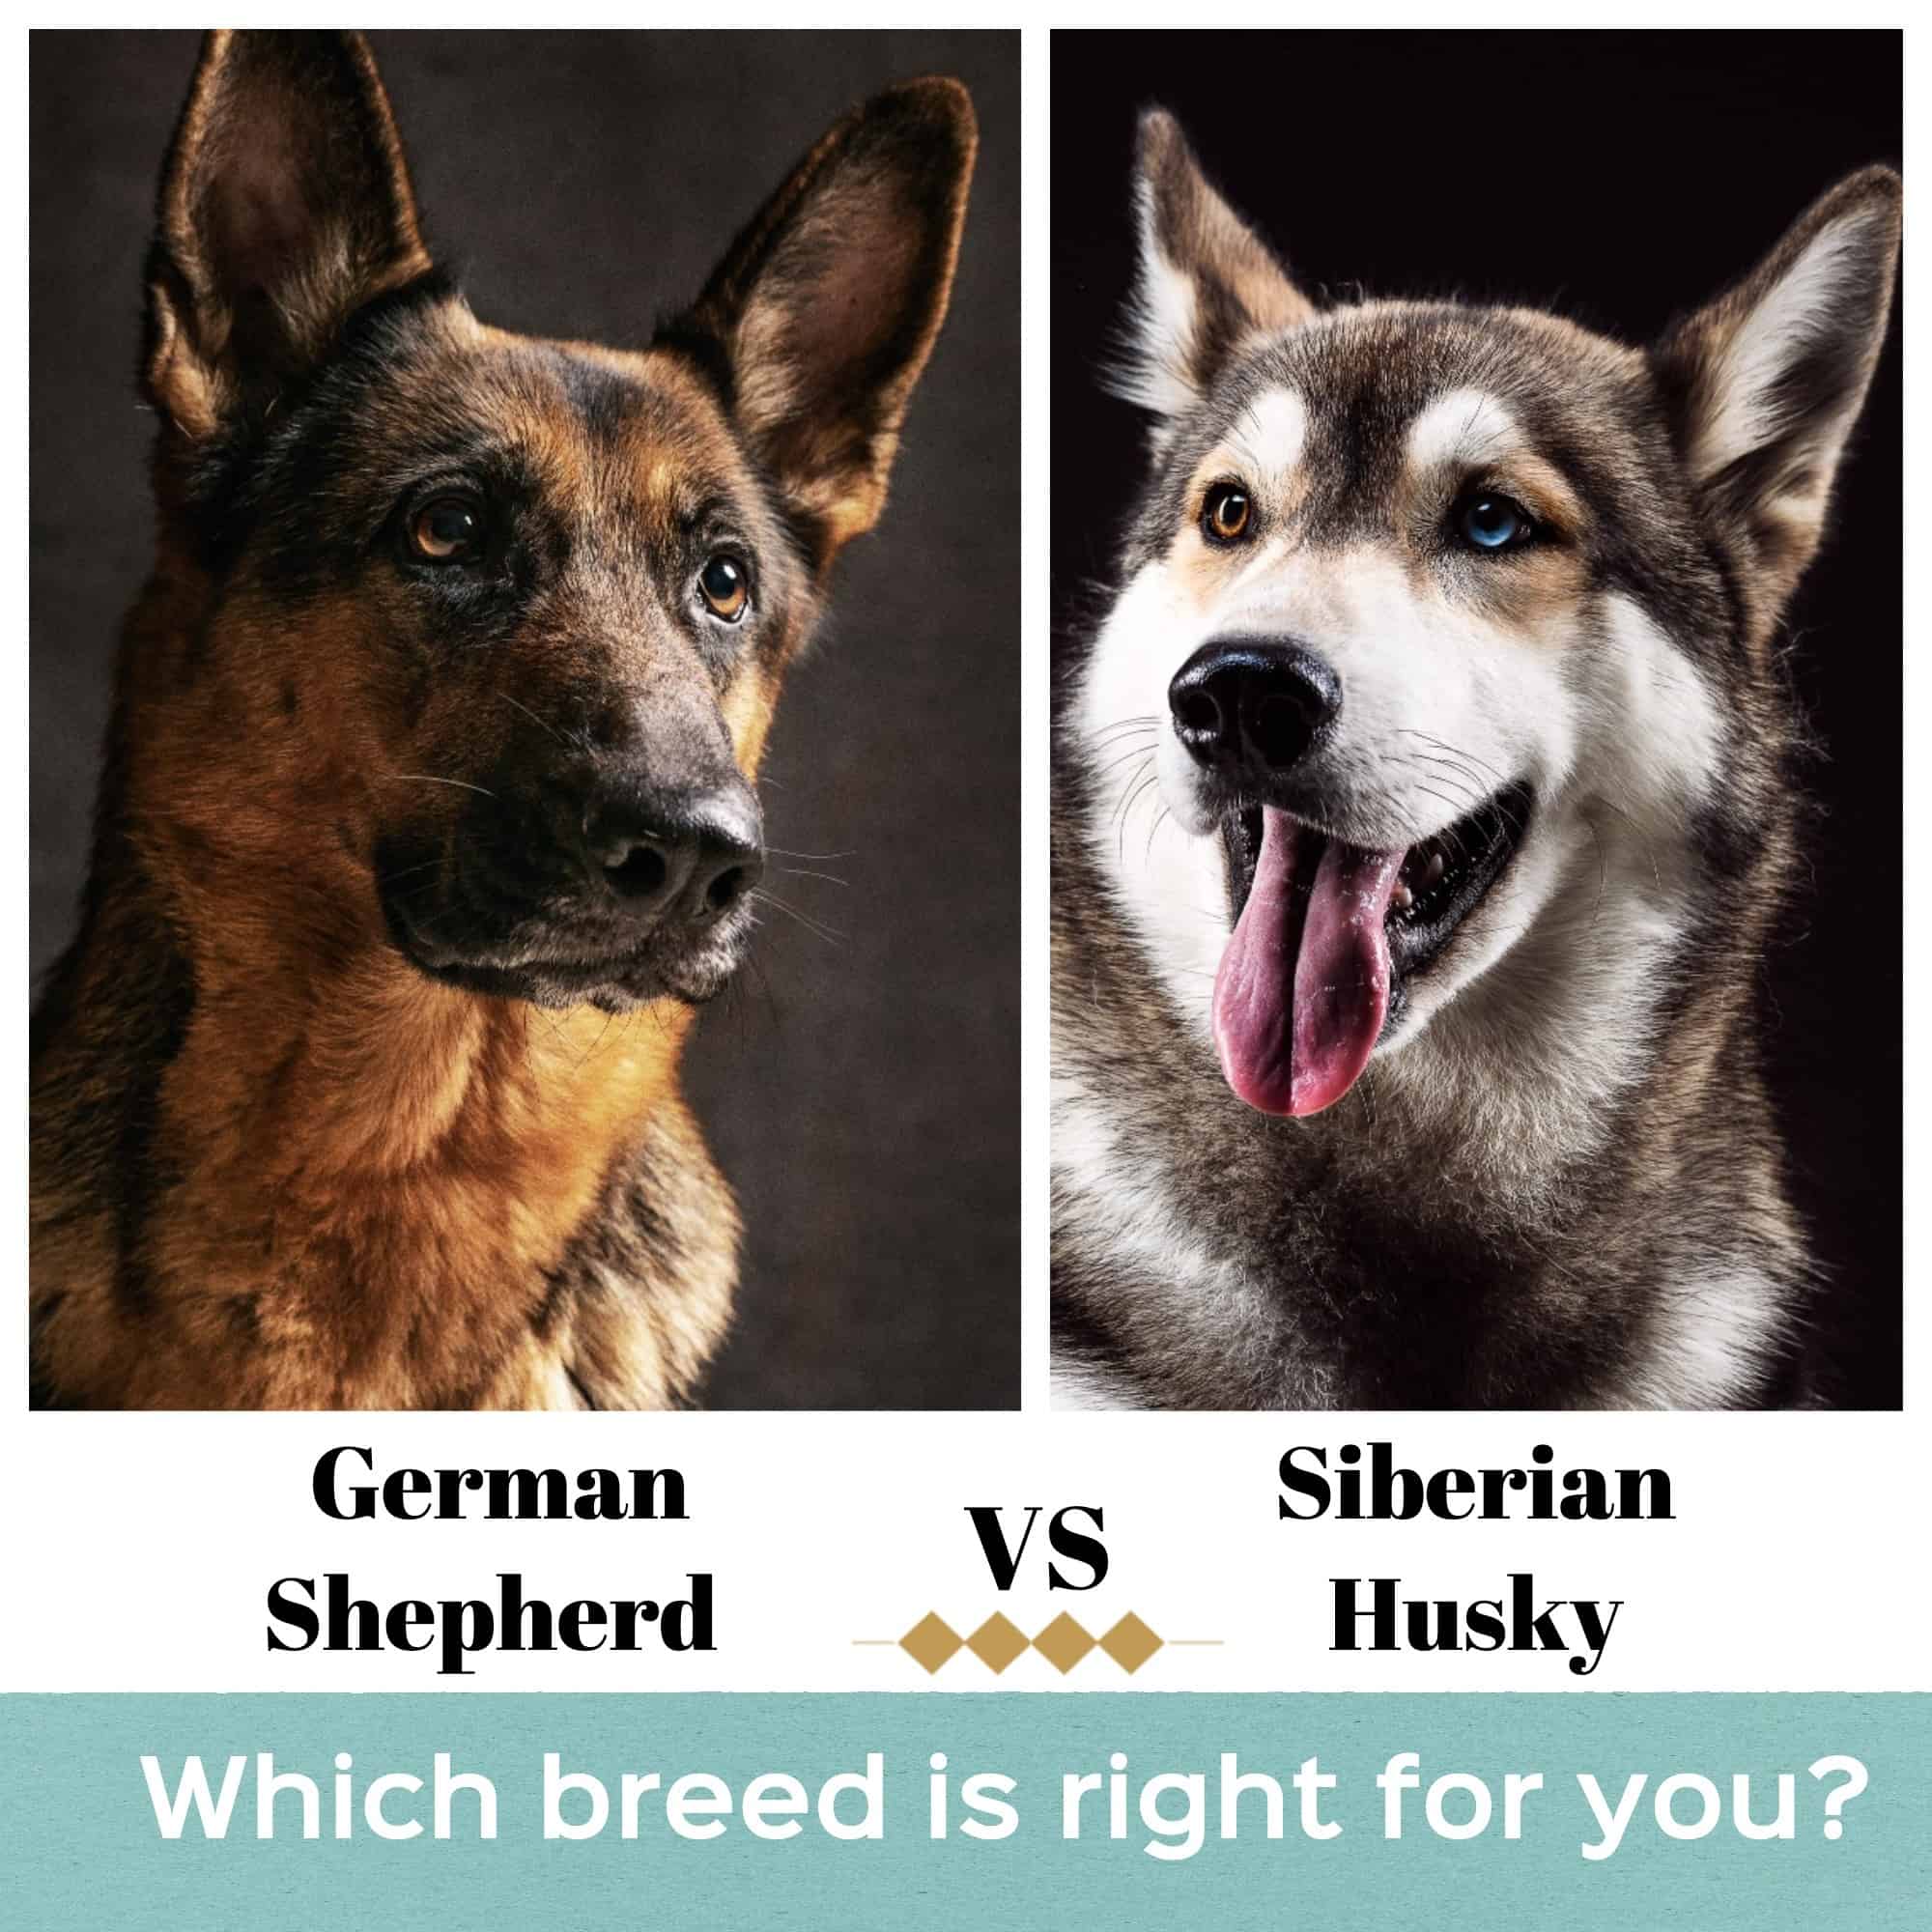 German Shepherd VS Husky